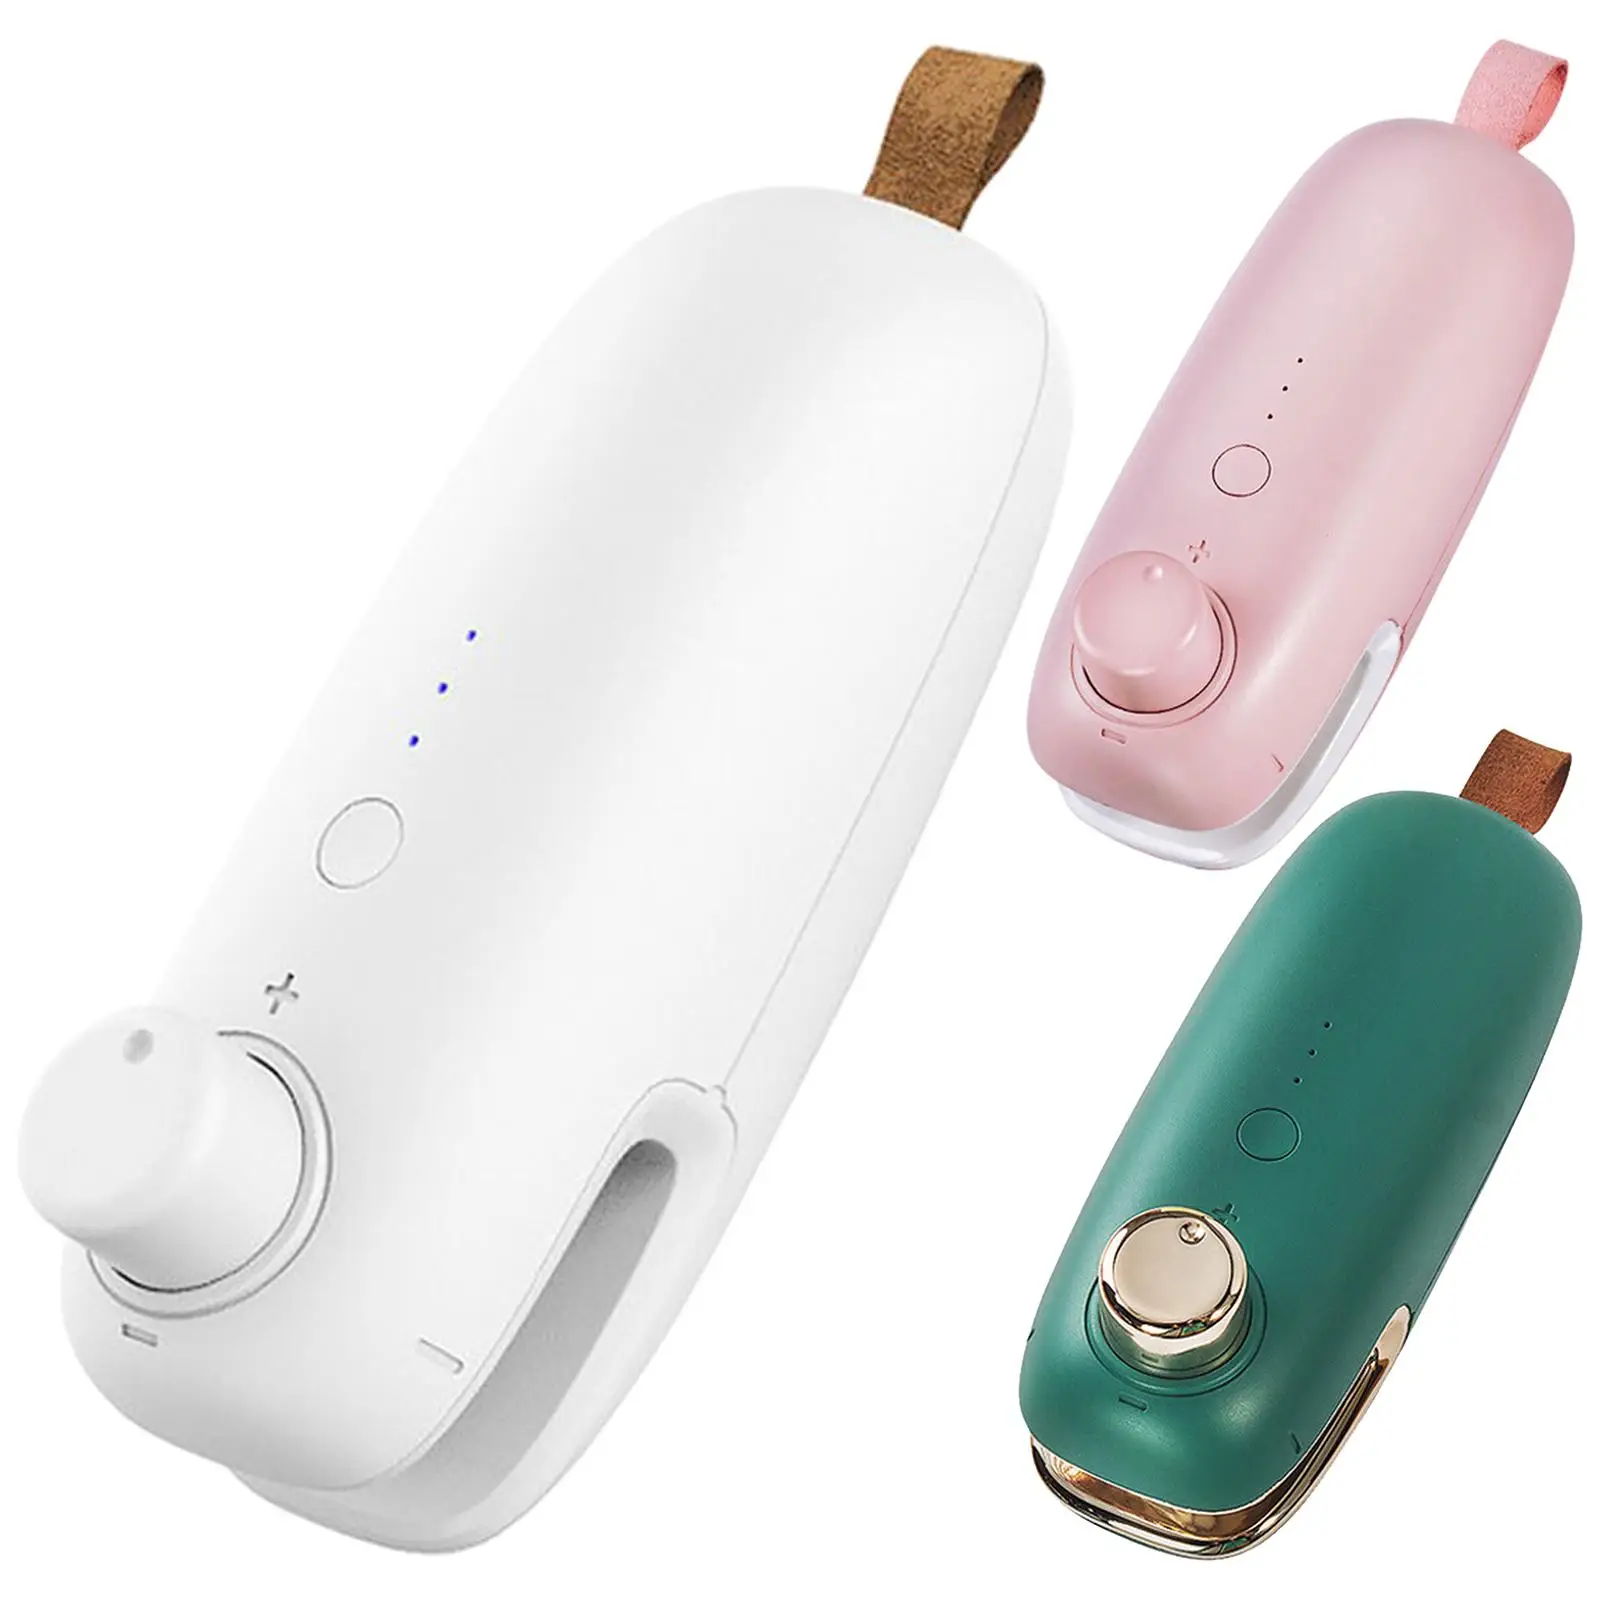 USB Handheld Bag Sealer Chargeable Portable  Bag Sealer for Plastic, Mini Handheld Heat Sealer for Food 